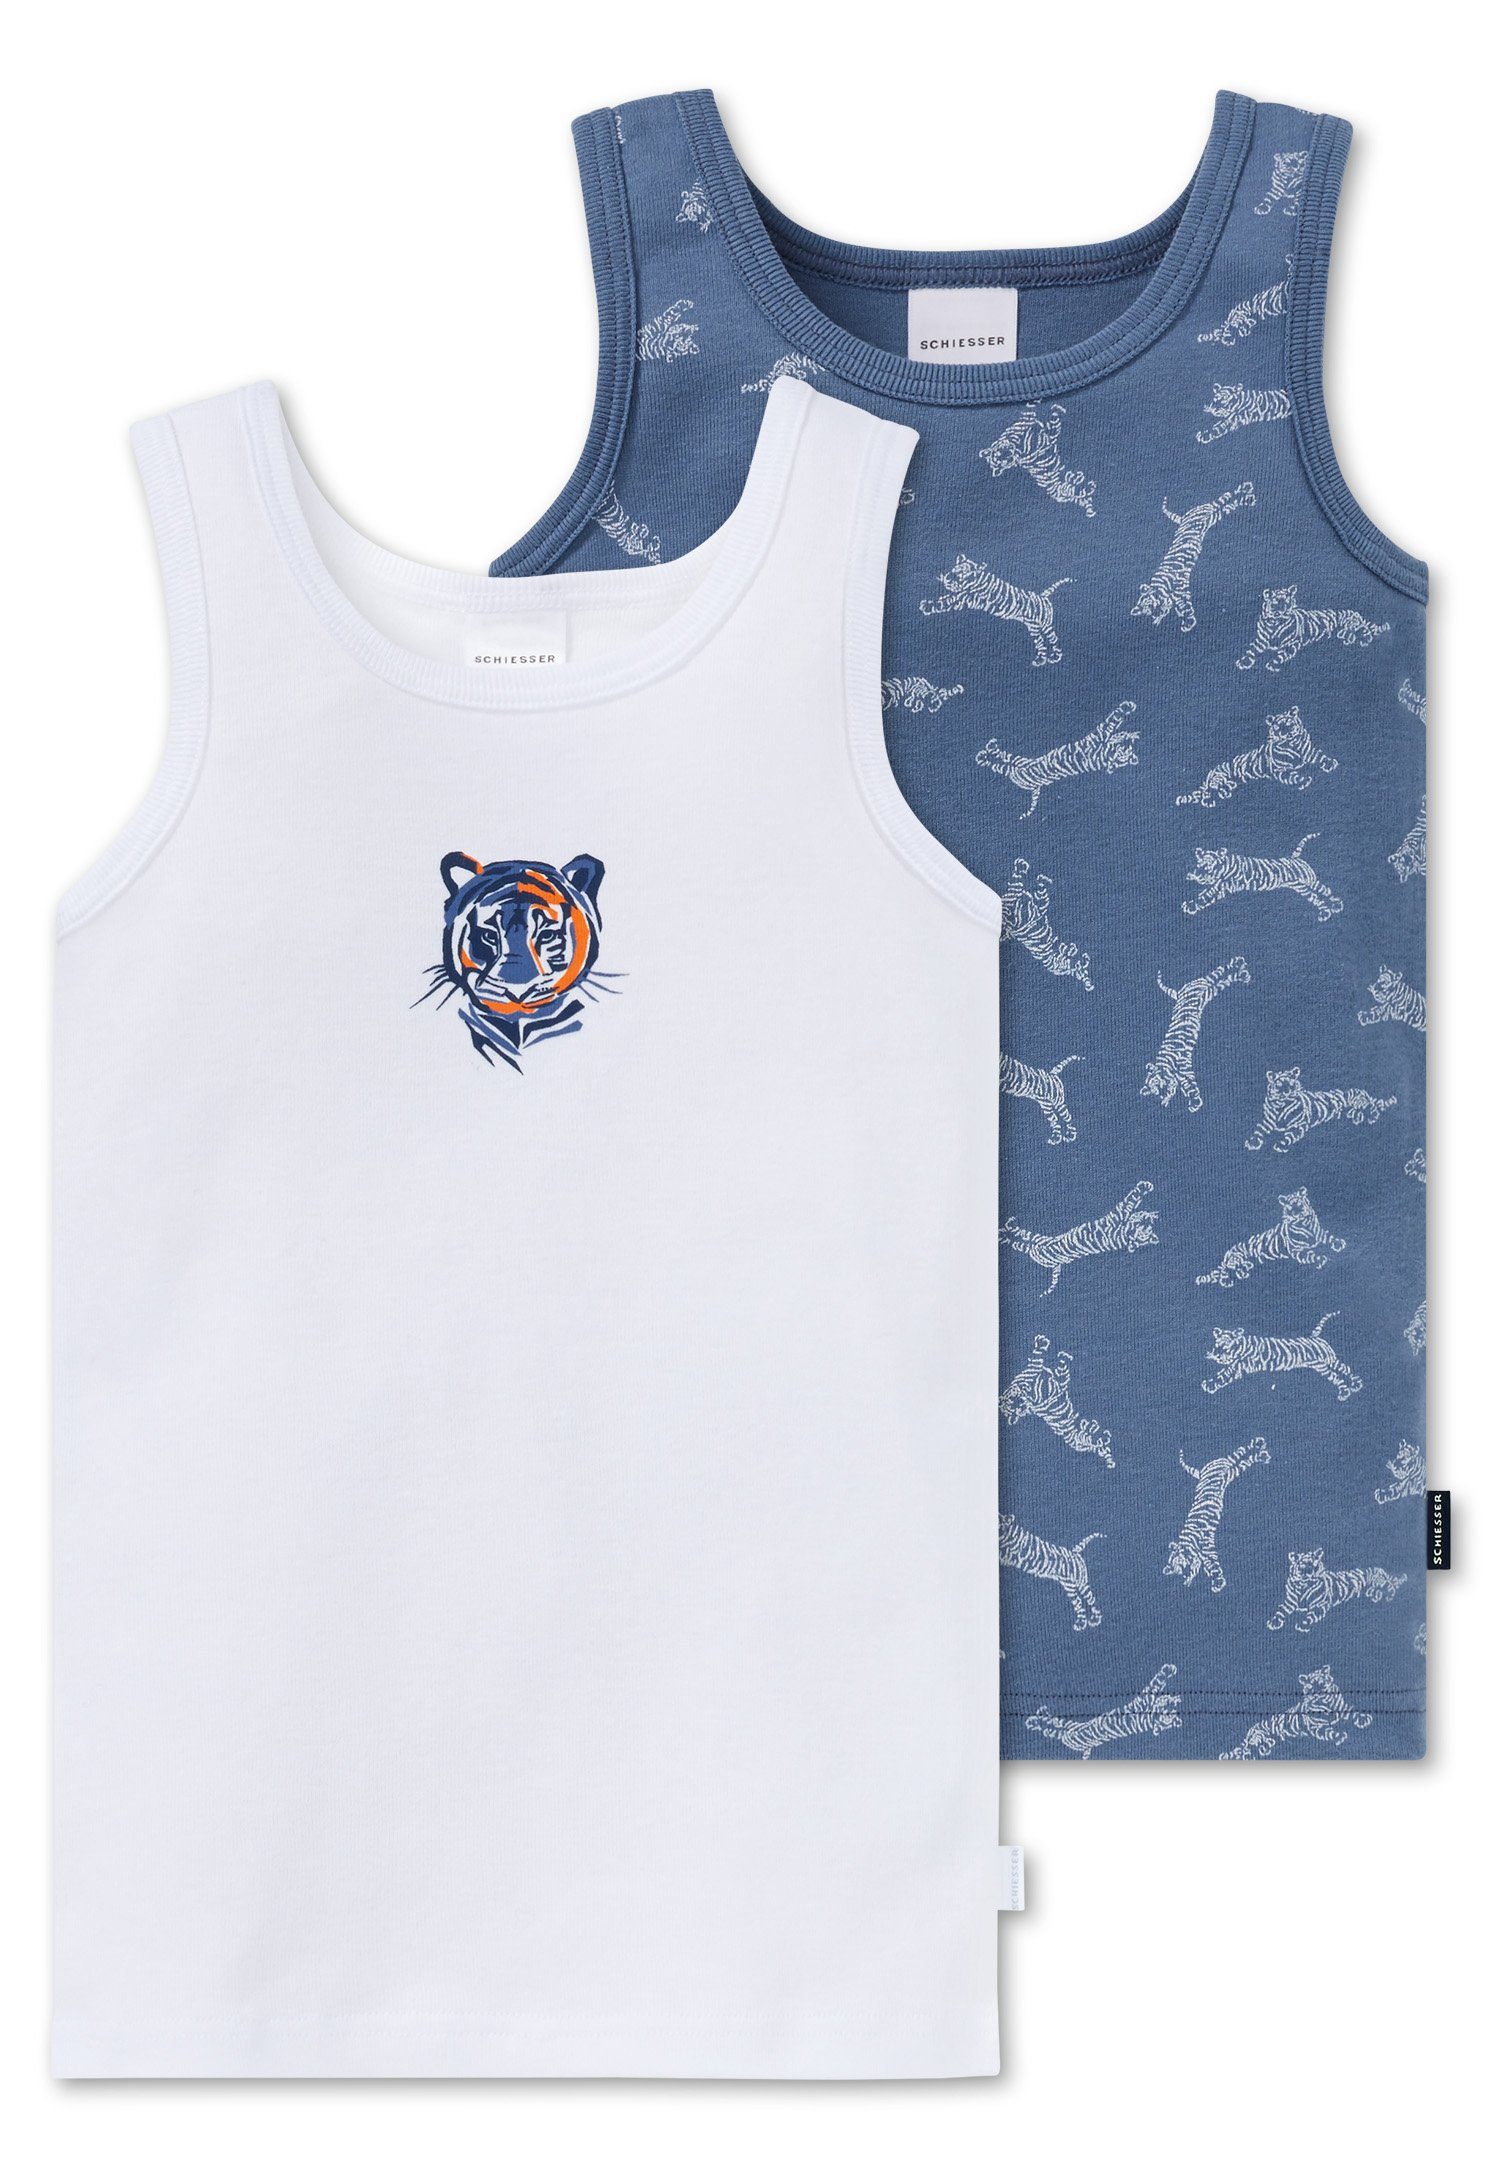 Schiesser Unterhemd Easy Tiger (Set, 2-St., 2er-Pack) Jungen Unterhemd, Tank Top, Feinripp-Qualität